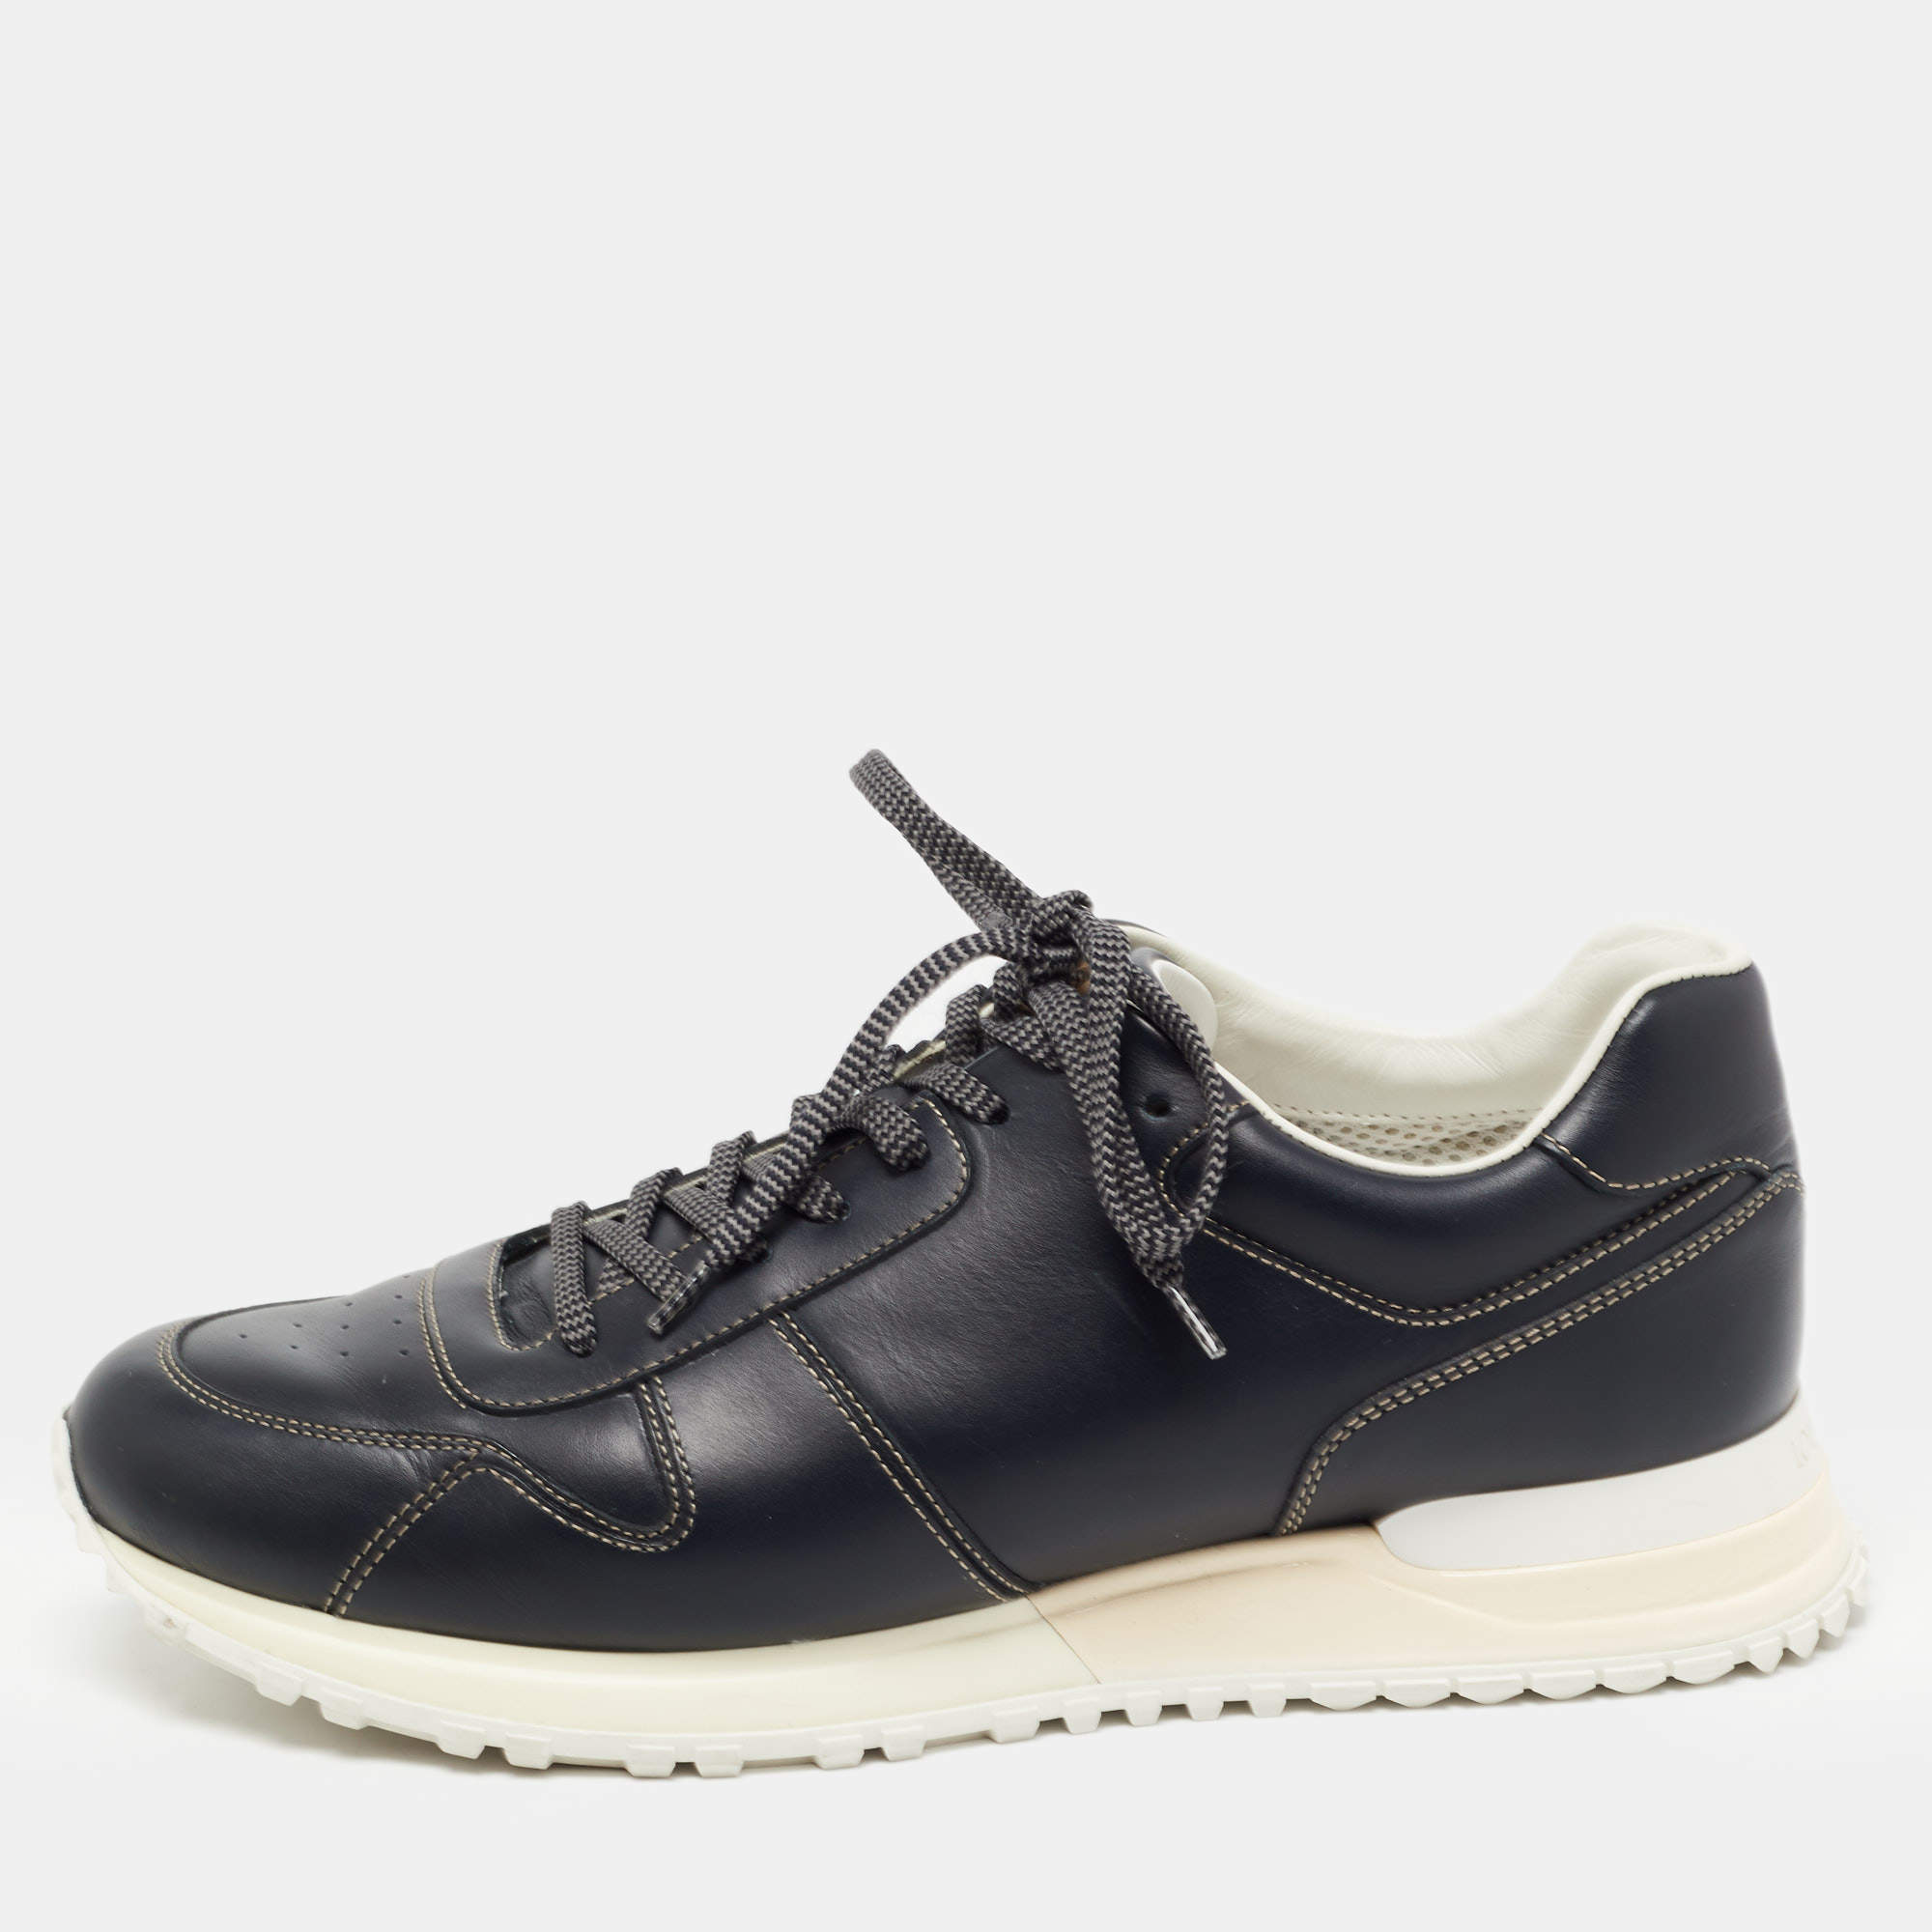 Run away leather trainers Louis Vuitton Black size 40.5 EU in